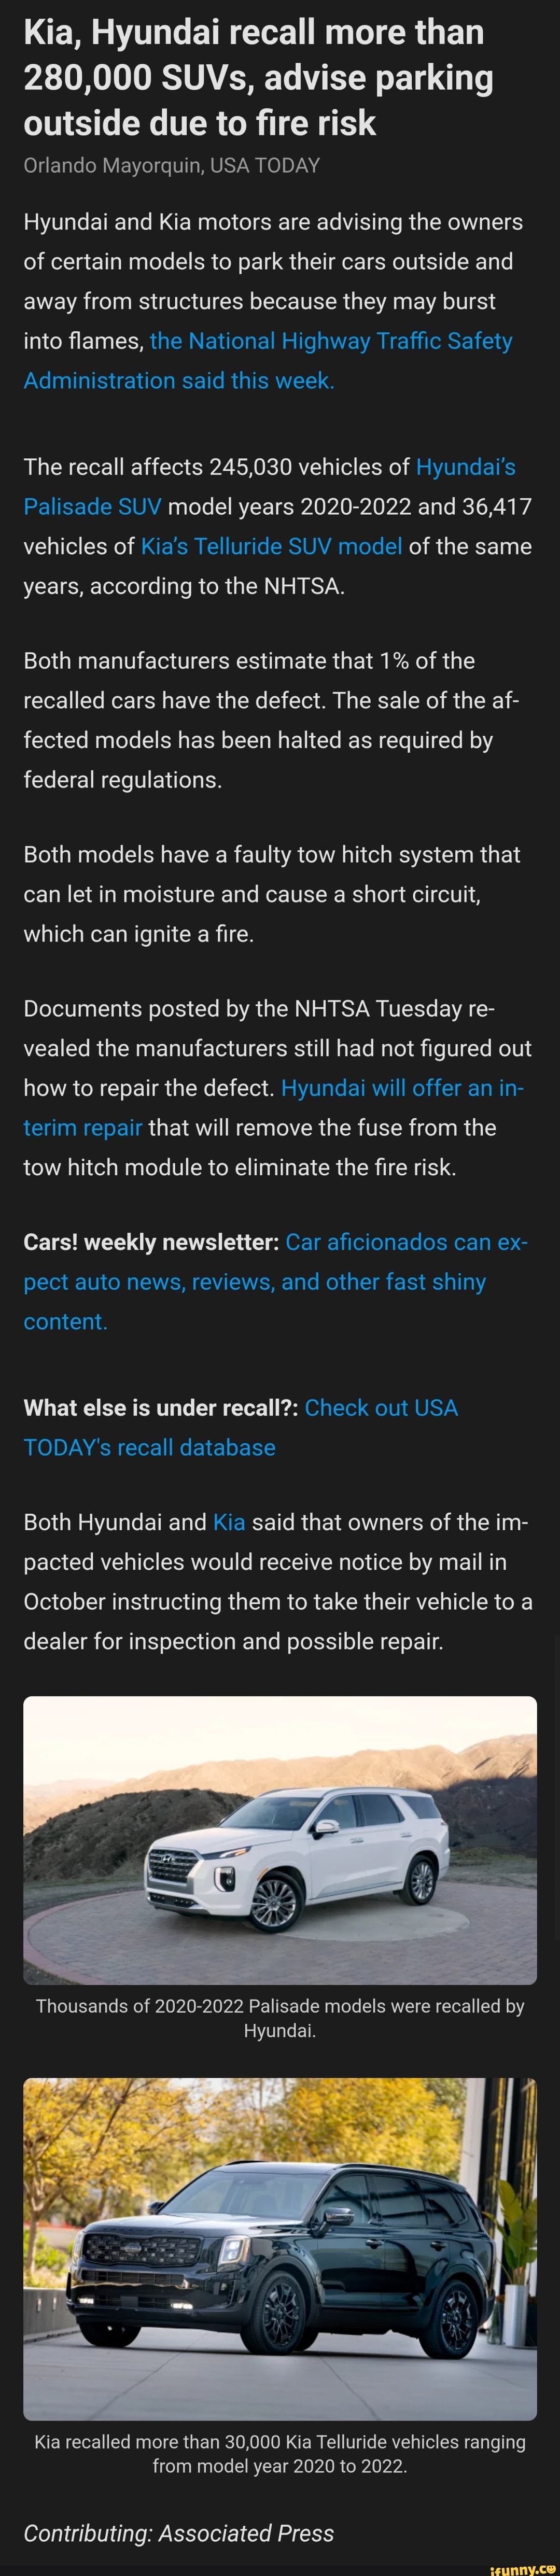 Hyundai Palisade, Kia Telluride SUVs recalled for increased fire